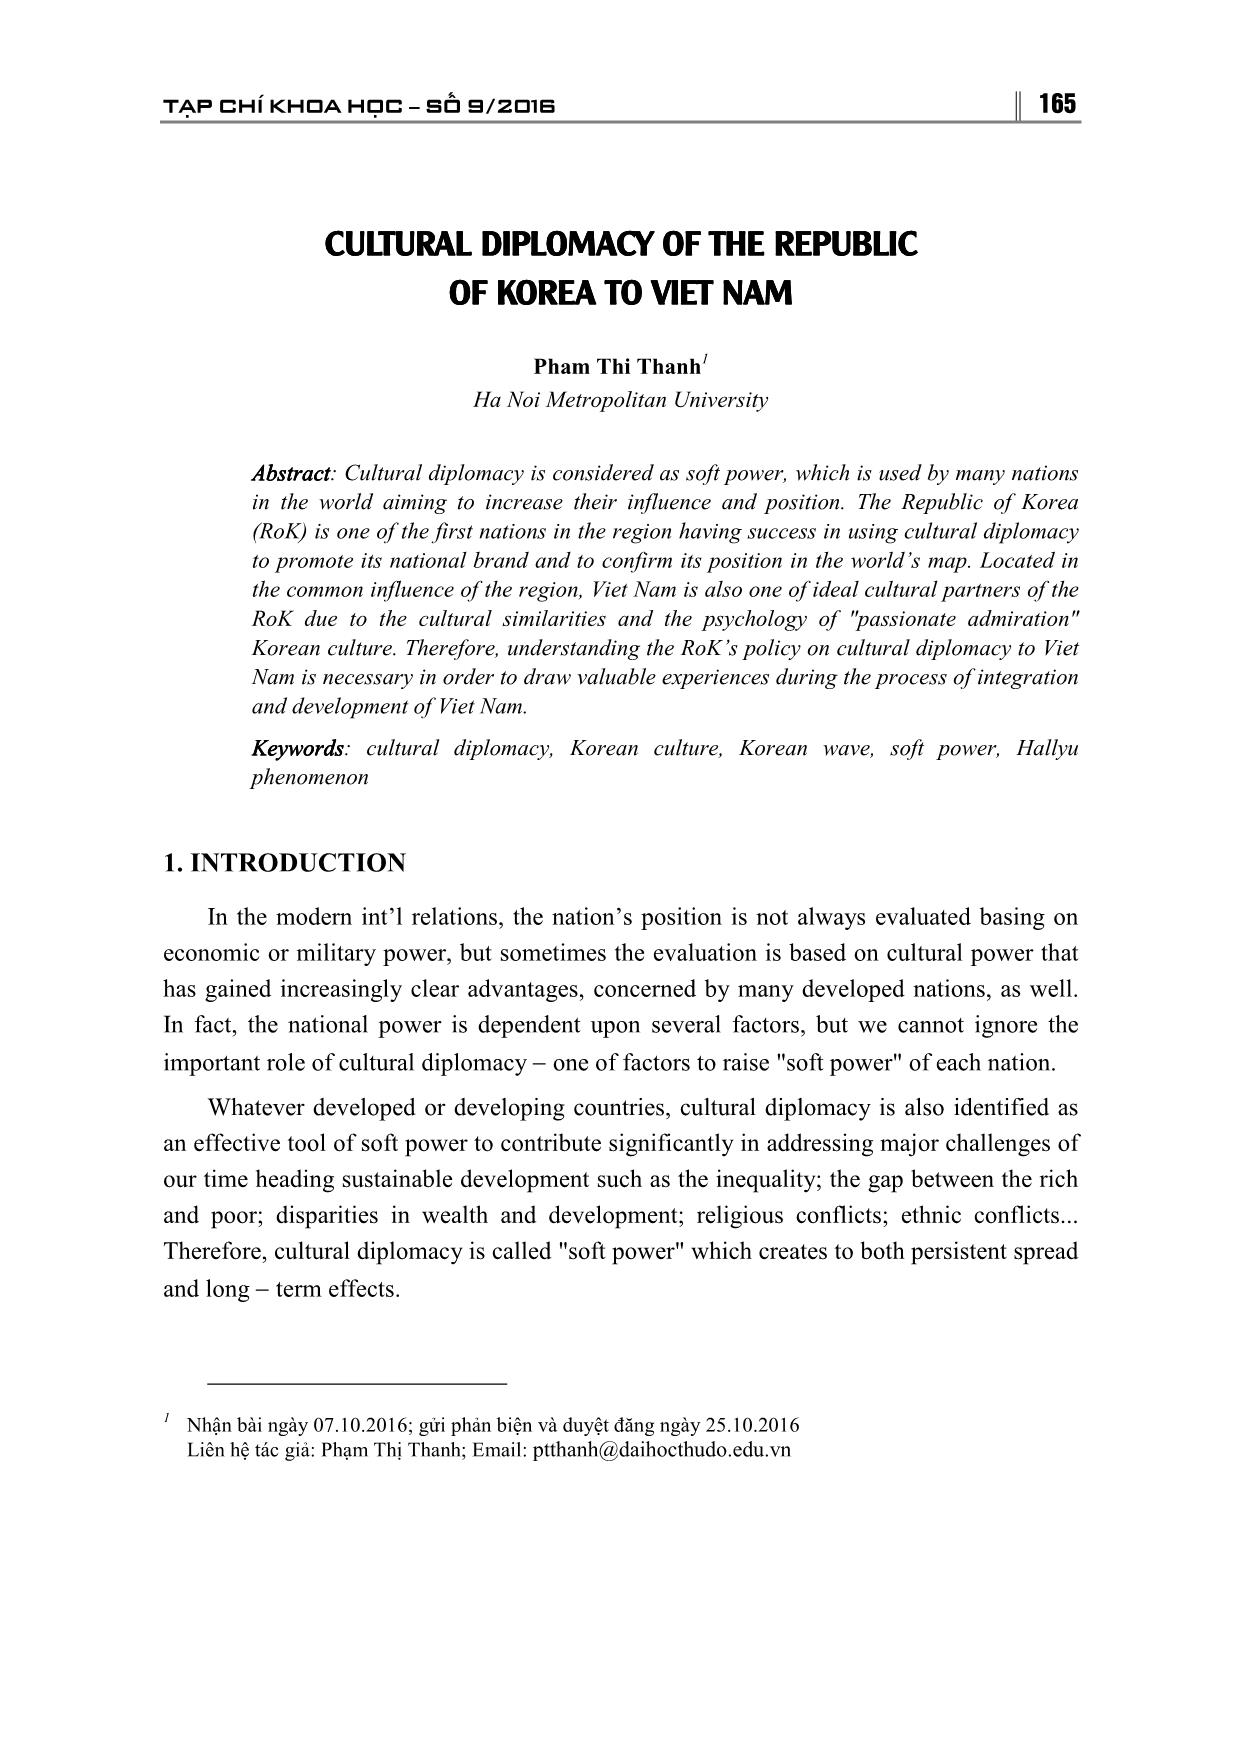 Cultural diplomacy of the republic of Korea to Viet Nam trang 1